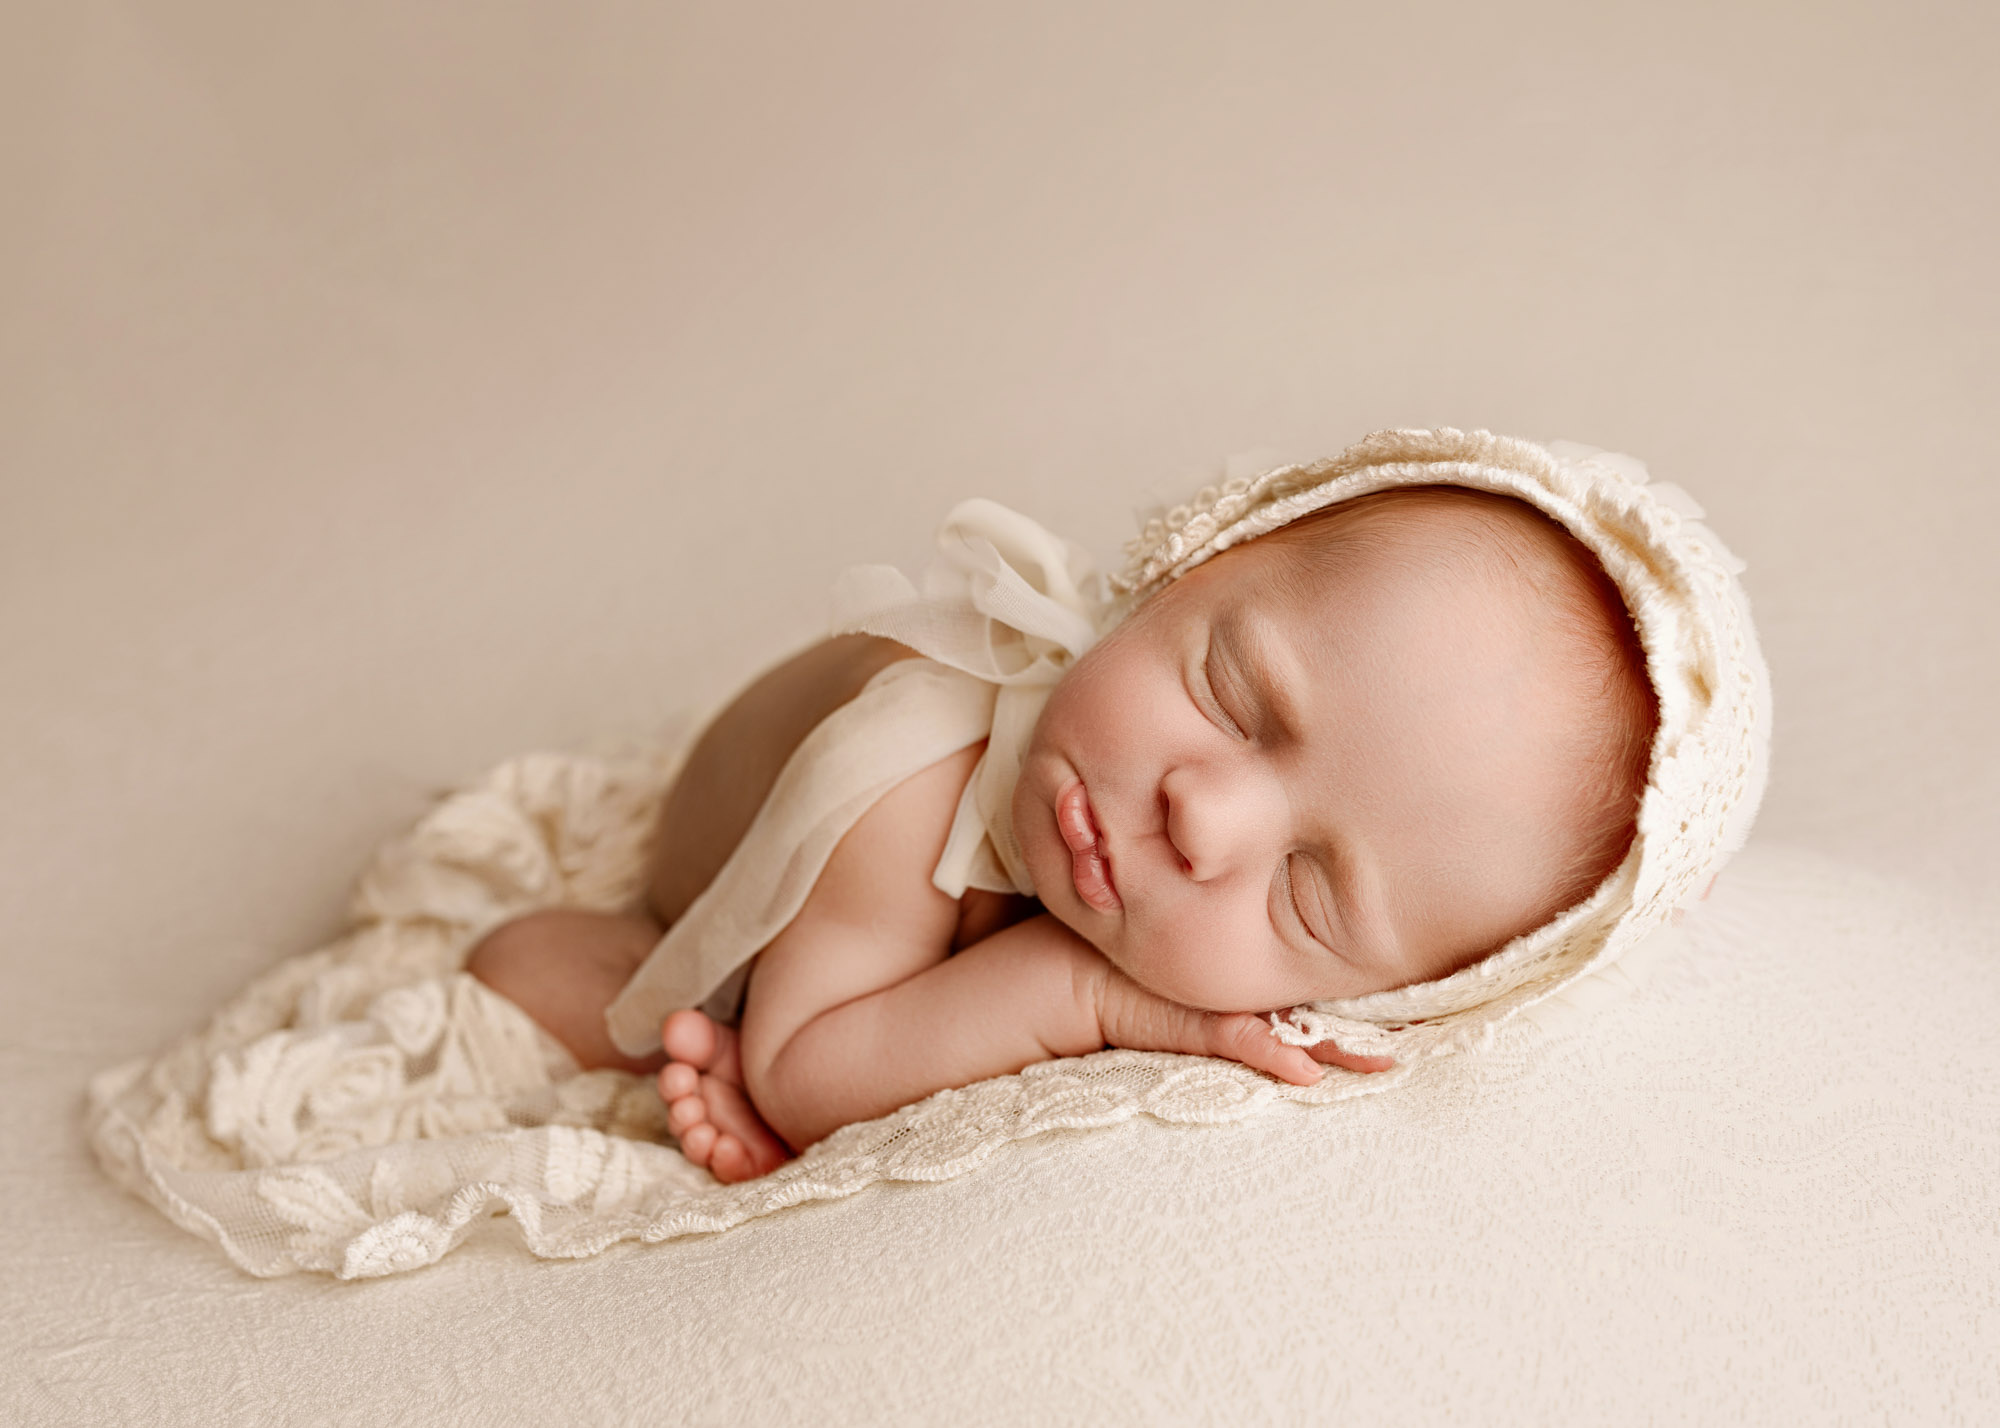 pout baby lips white hat newborn